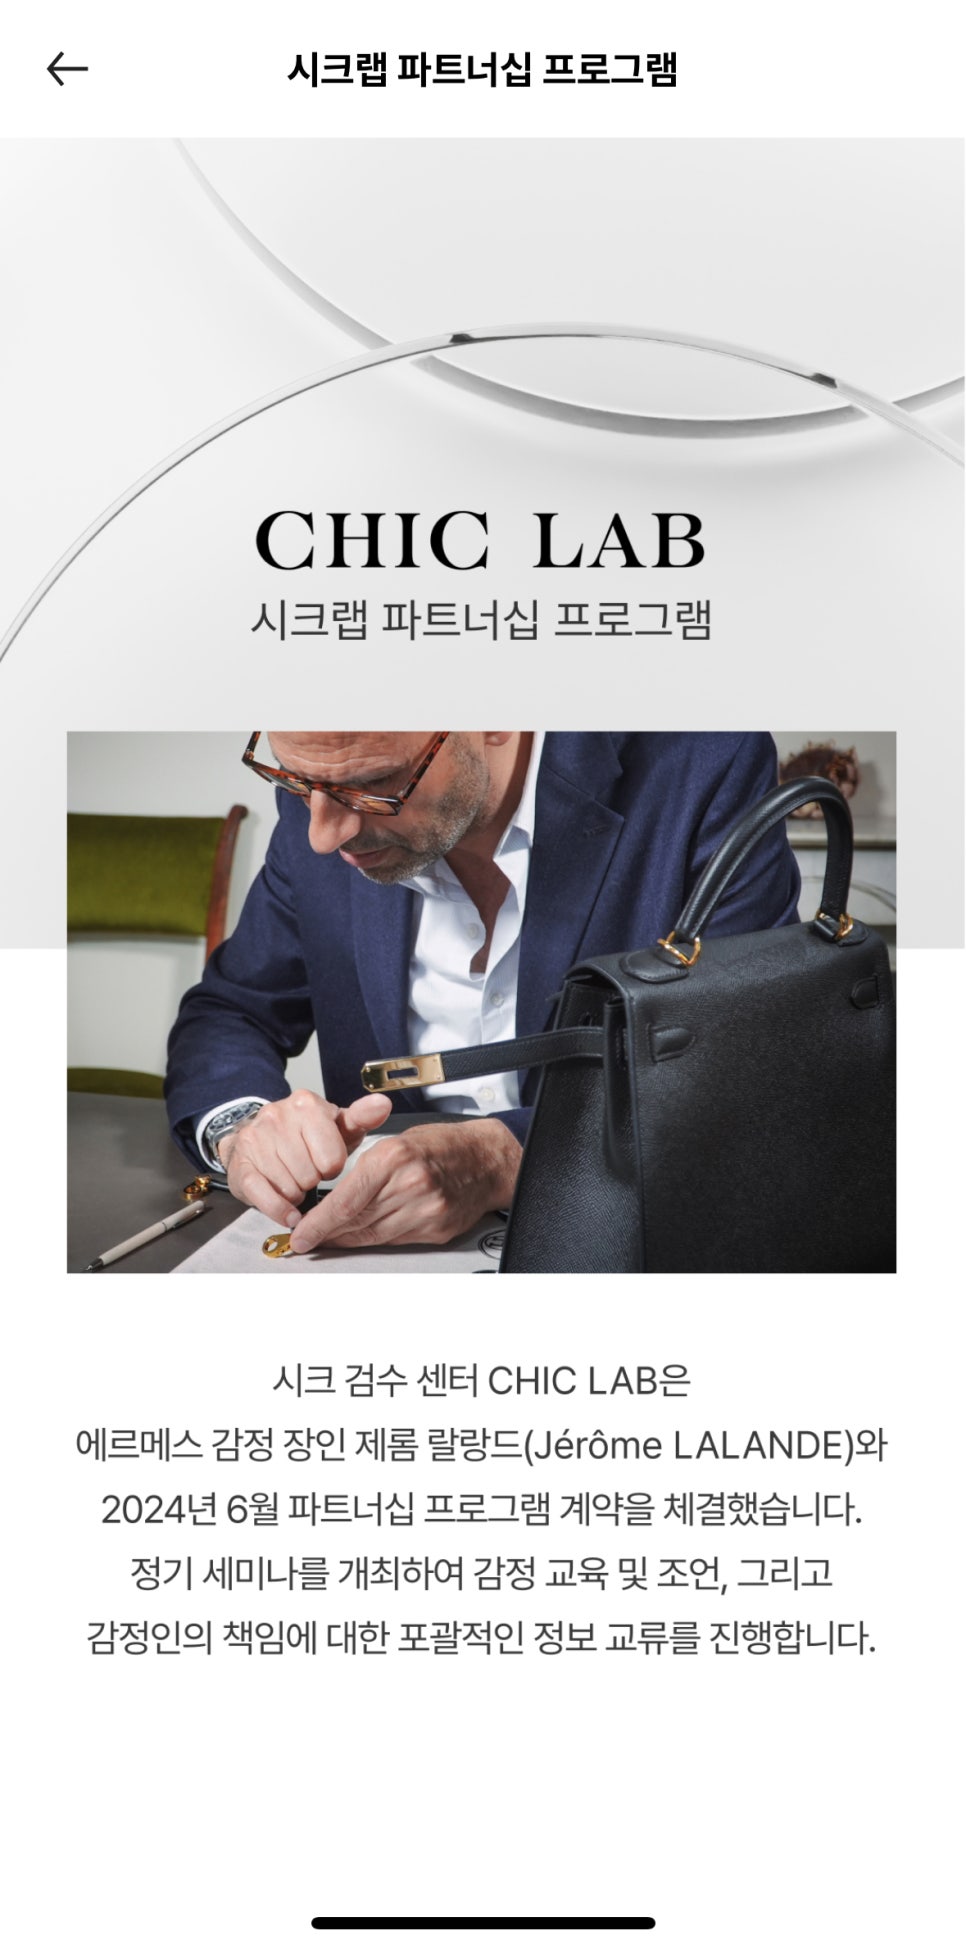 CHIC 시크앱 초대코드 4LPGQ2O 압구정 중고 명품 판매 샤넬 에르메스